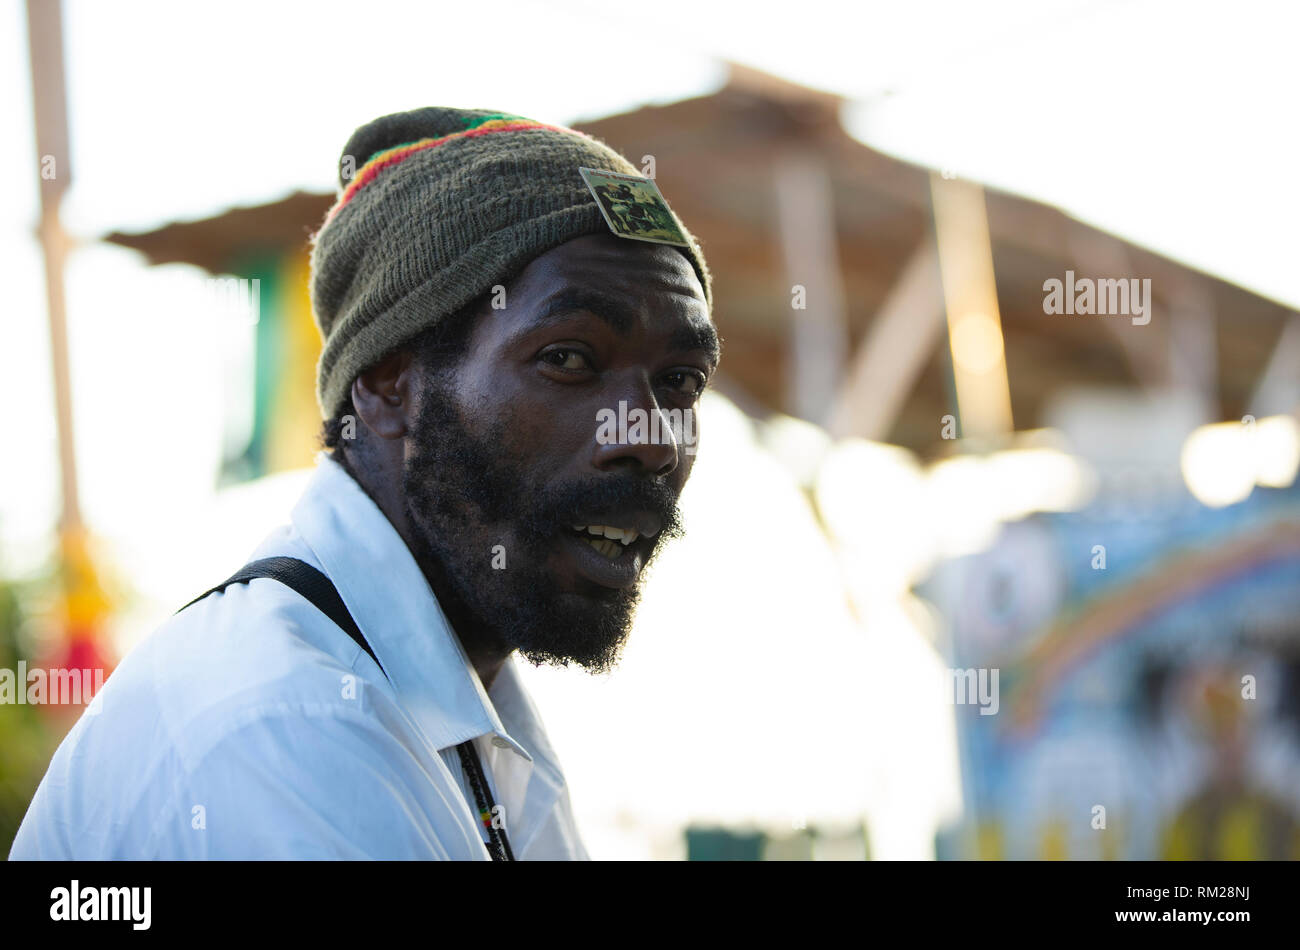 Blue Mountain, St. Andrew / Jamaica - February 2, 2019: Portrait of a Rastafarian at the Rasta Village St. Andrew, Jamaica Stock Photo